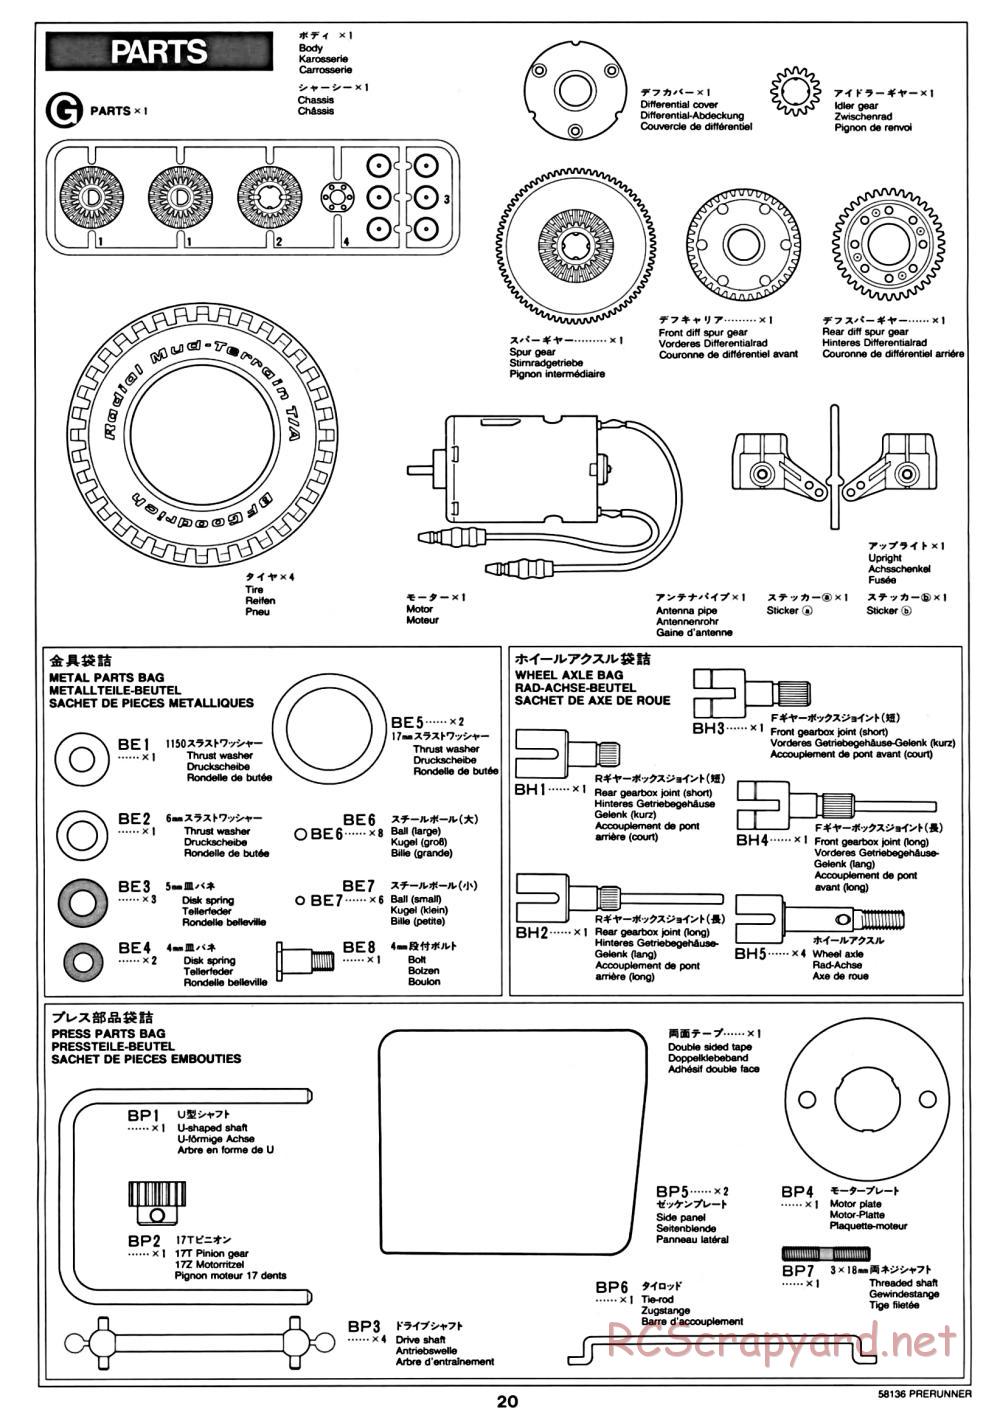 Tamiya - Toyota Prerunner Chassis - Manual - Page 20